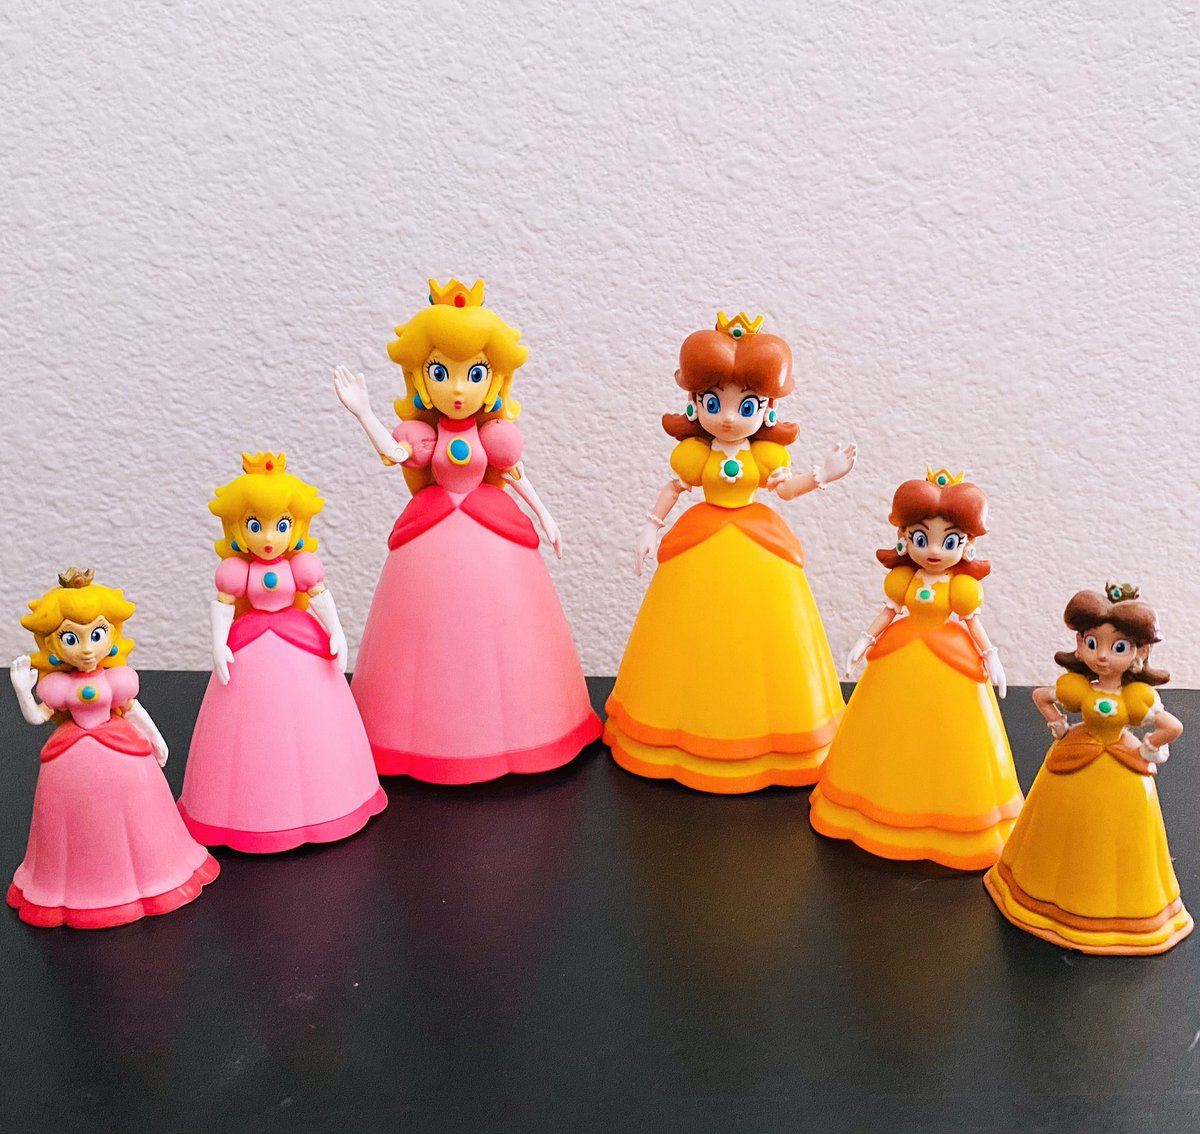 Pink and Orange #peach #princesspeach #daisy #princessdaisy #princesspeachcollection #princessdaisycollection #oldvsnew